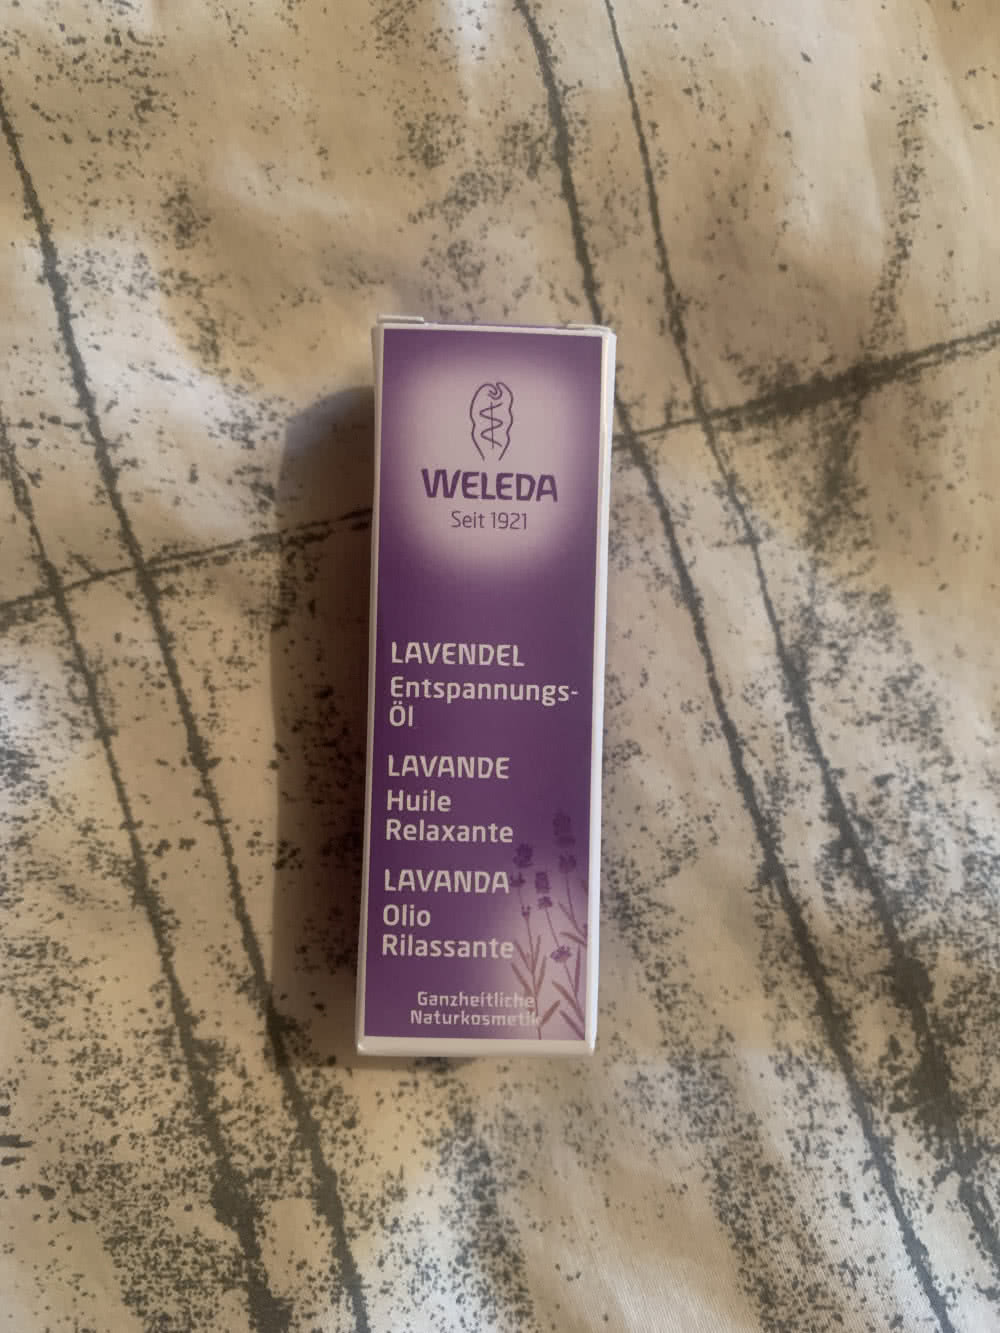 Weleda, Relaxing lavender Body Oil, 10ml ЦЕНА СНИЖЕНА ПО СРОКУ